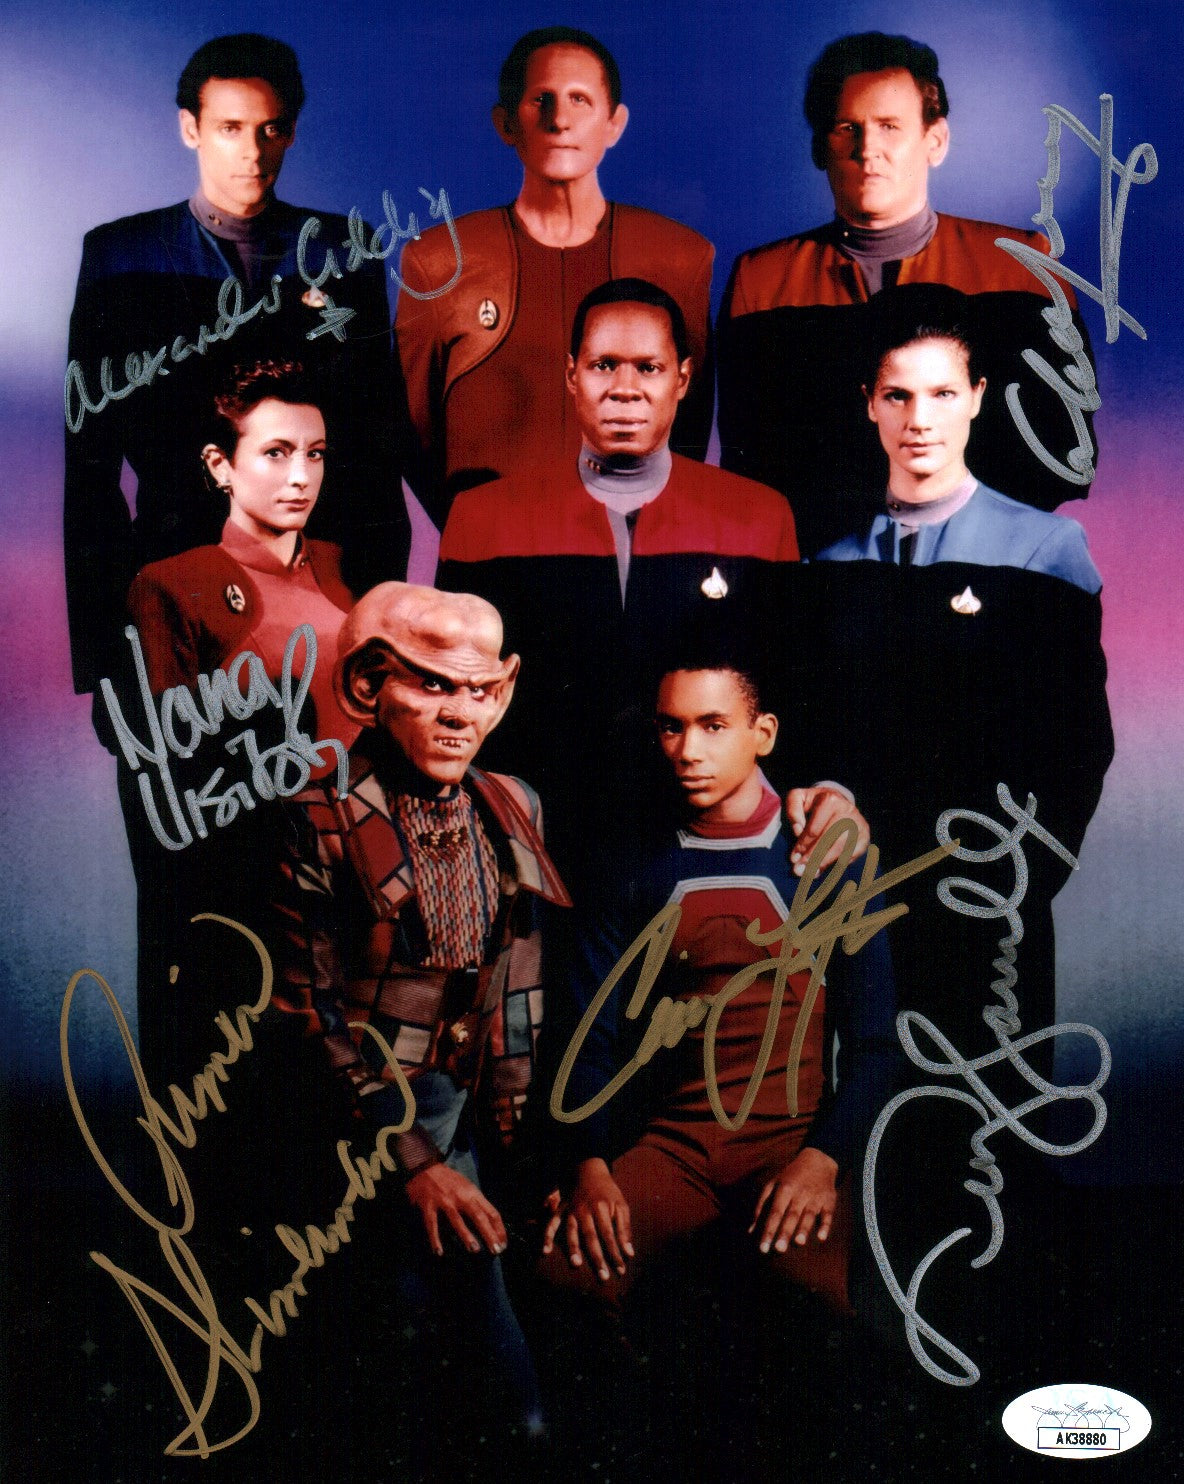 Star Trek: DS9 8x10 Photo Signed Farrell Lofton Meaney Shimerman Siddig Visitor Autograph JSA Certified COA GalaxyCon